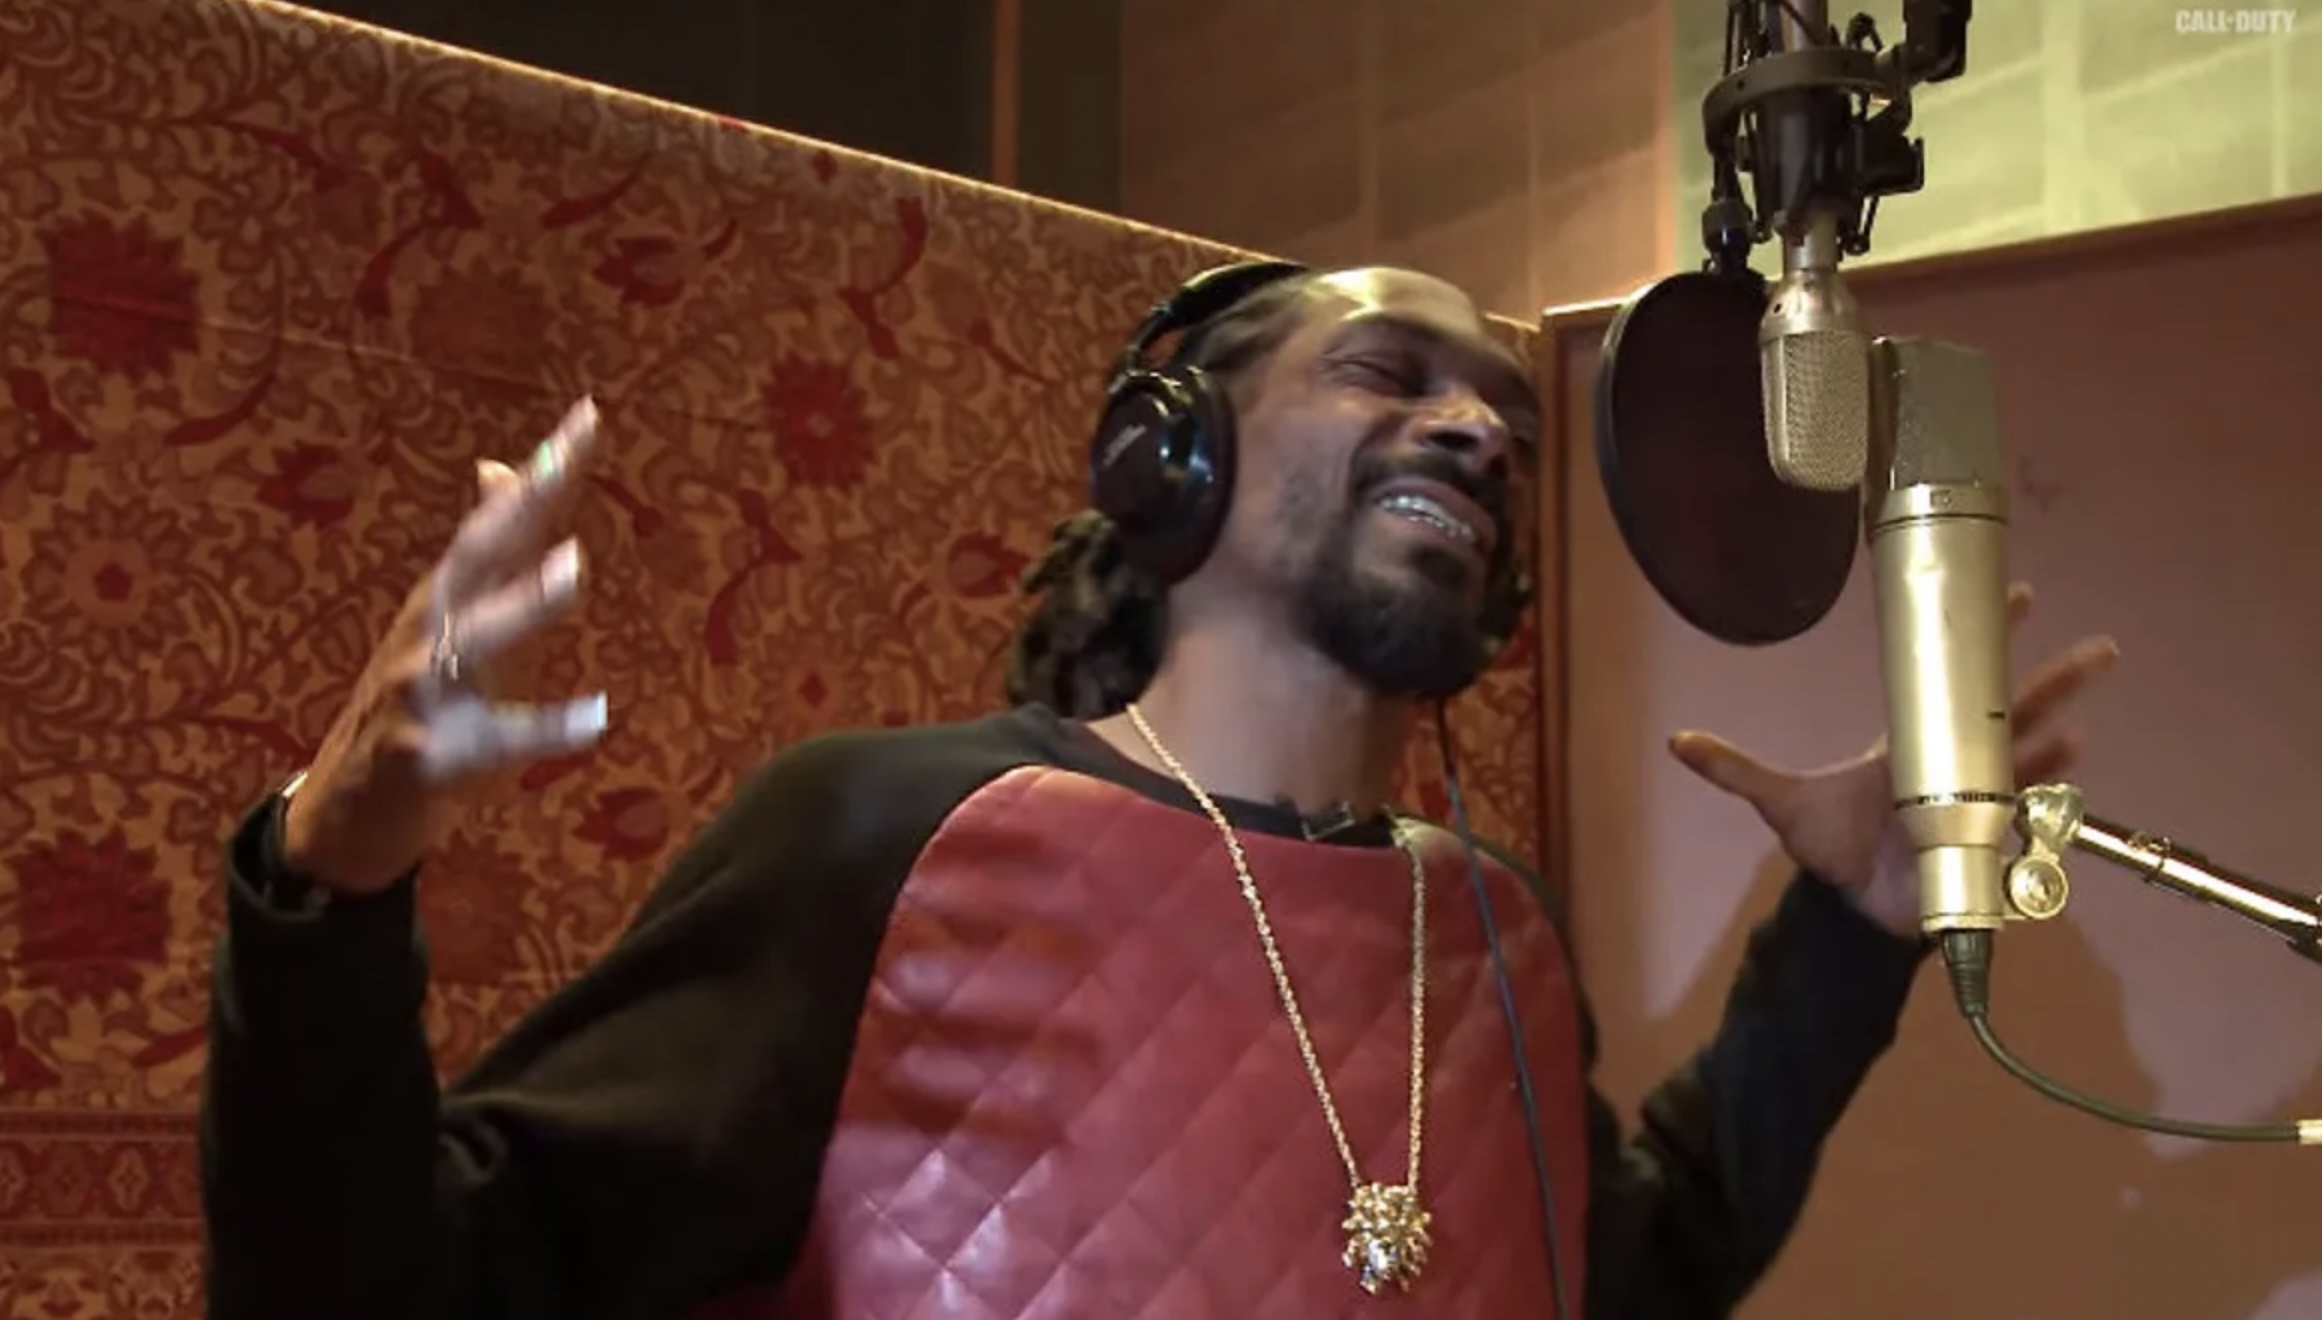 Call of Duty Is Adding Snoop Dogg DLC